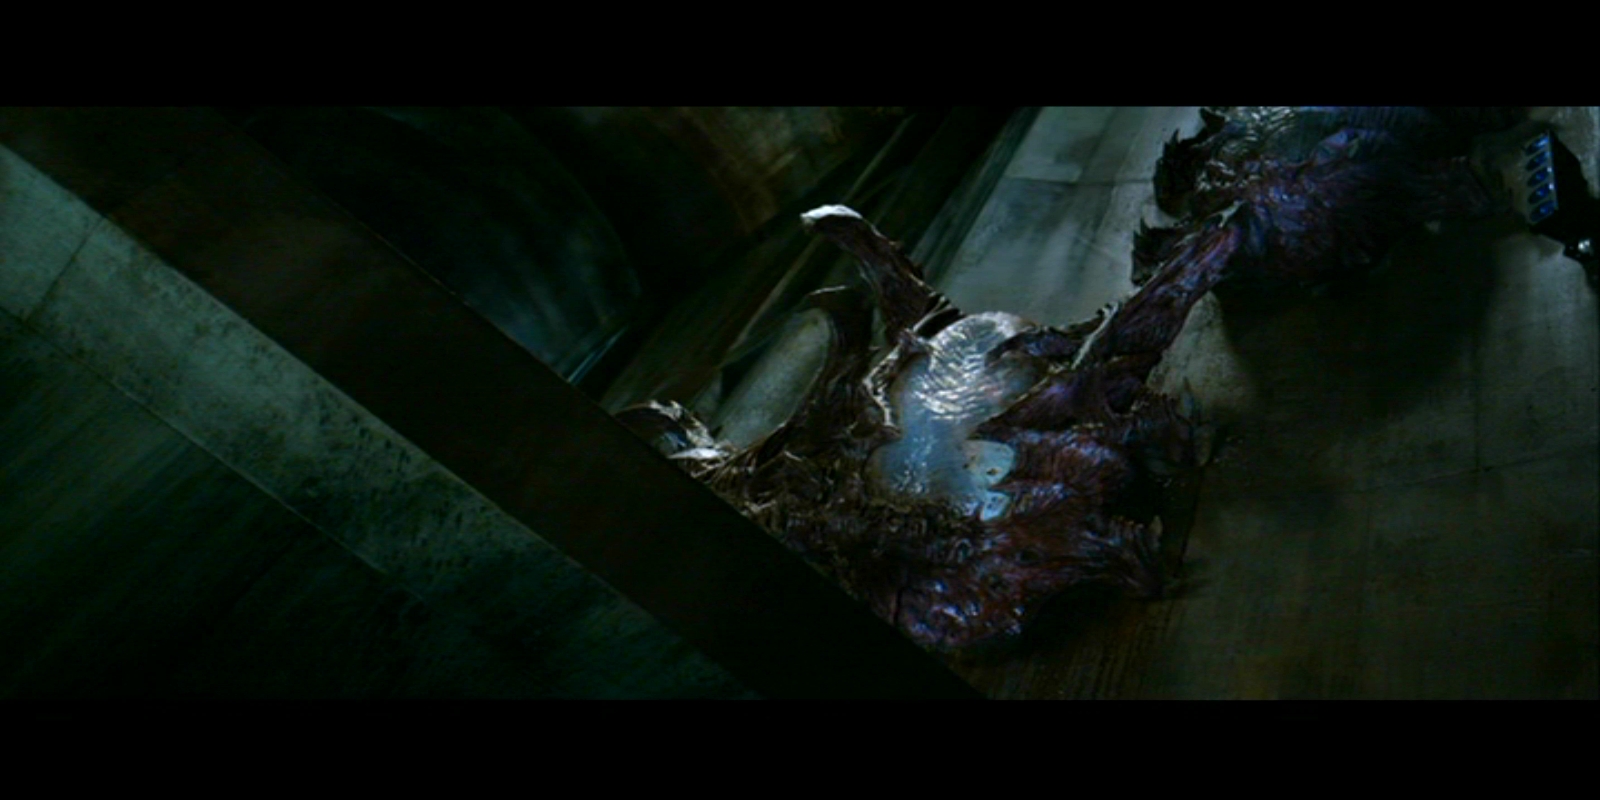 Descarga gratuita de fondo de pantalla para móvil de Películas, Resident Evil 5: La Venganza.